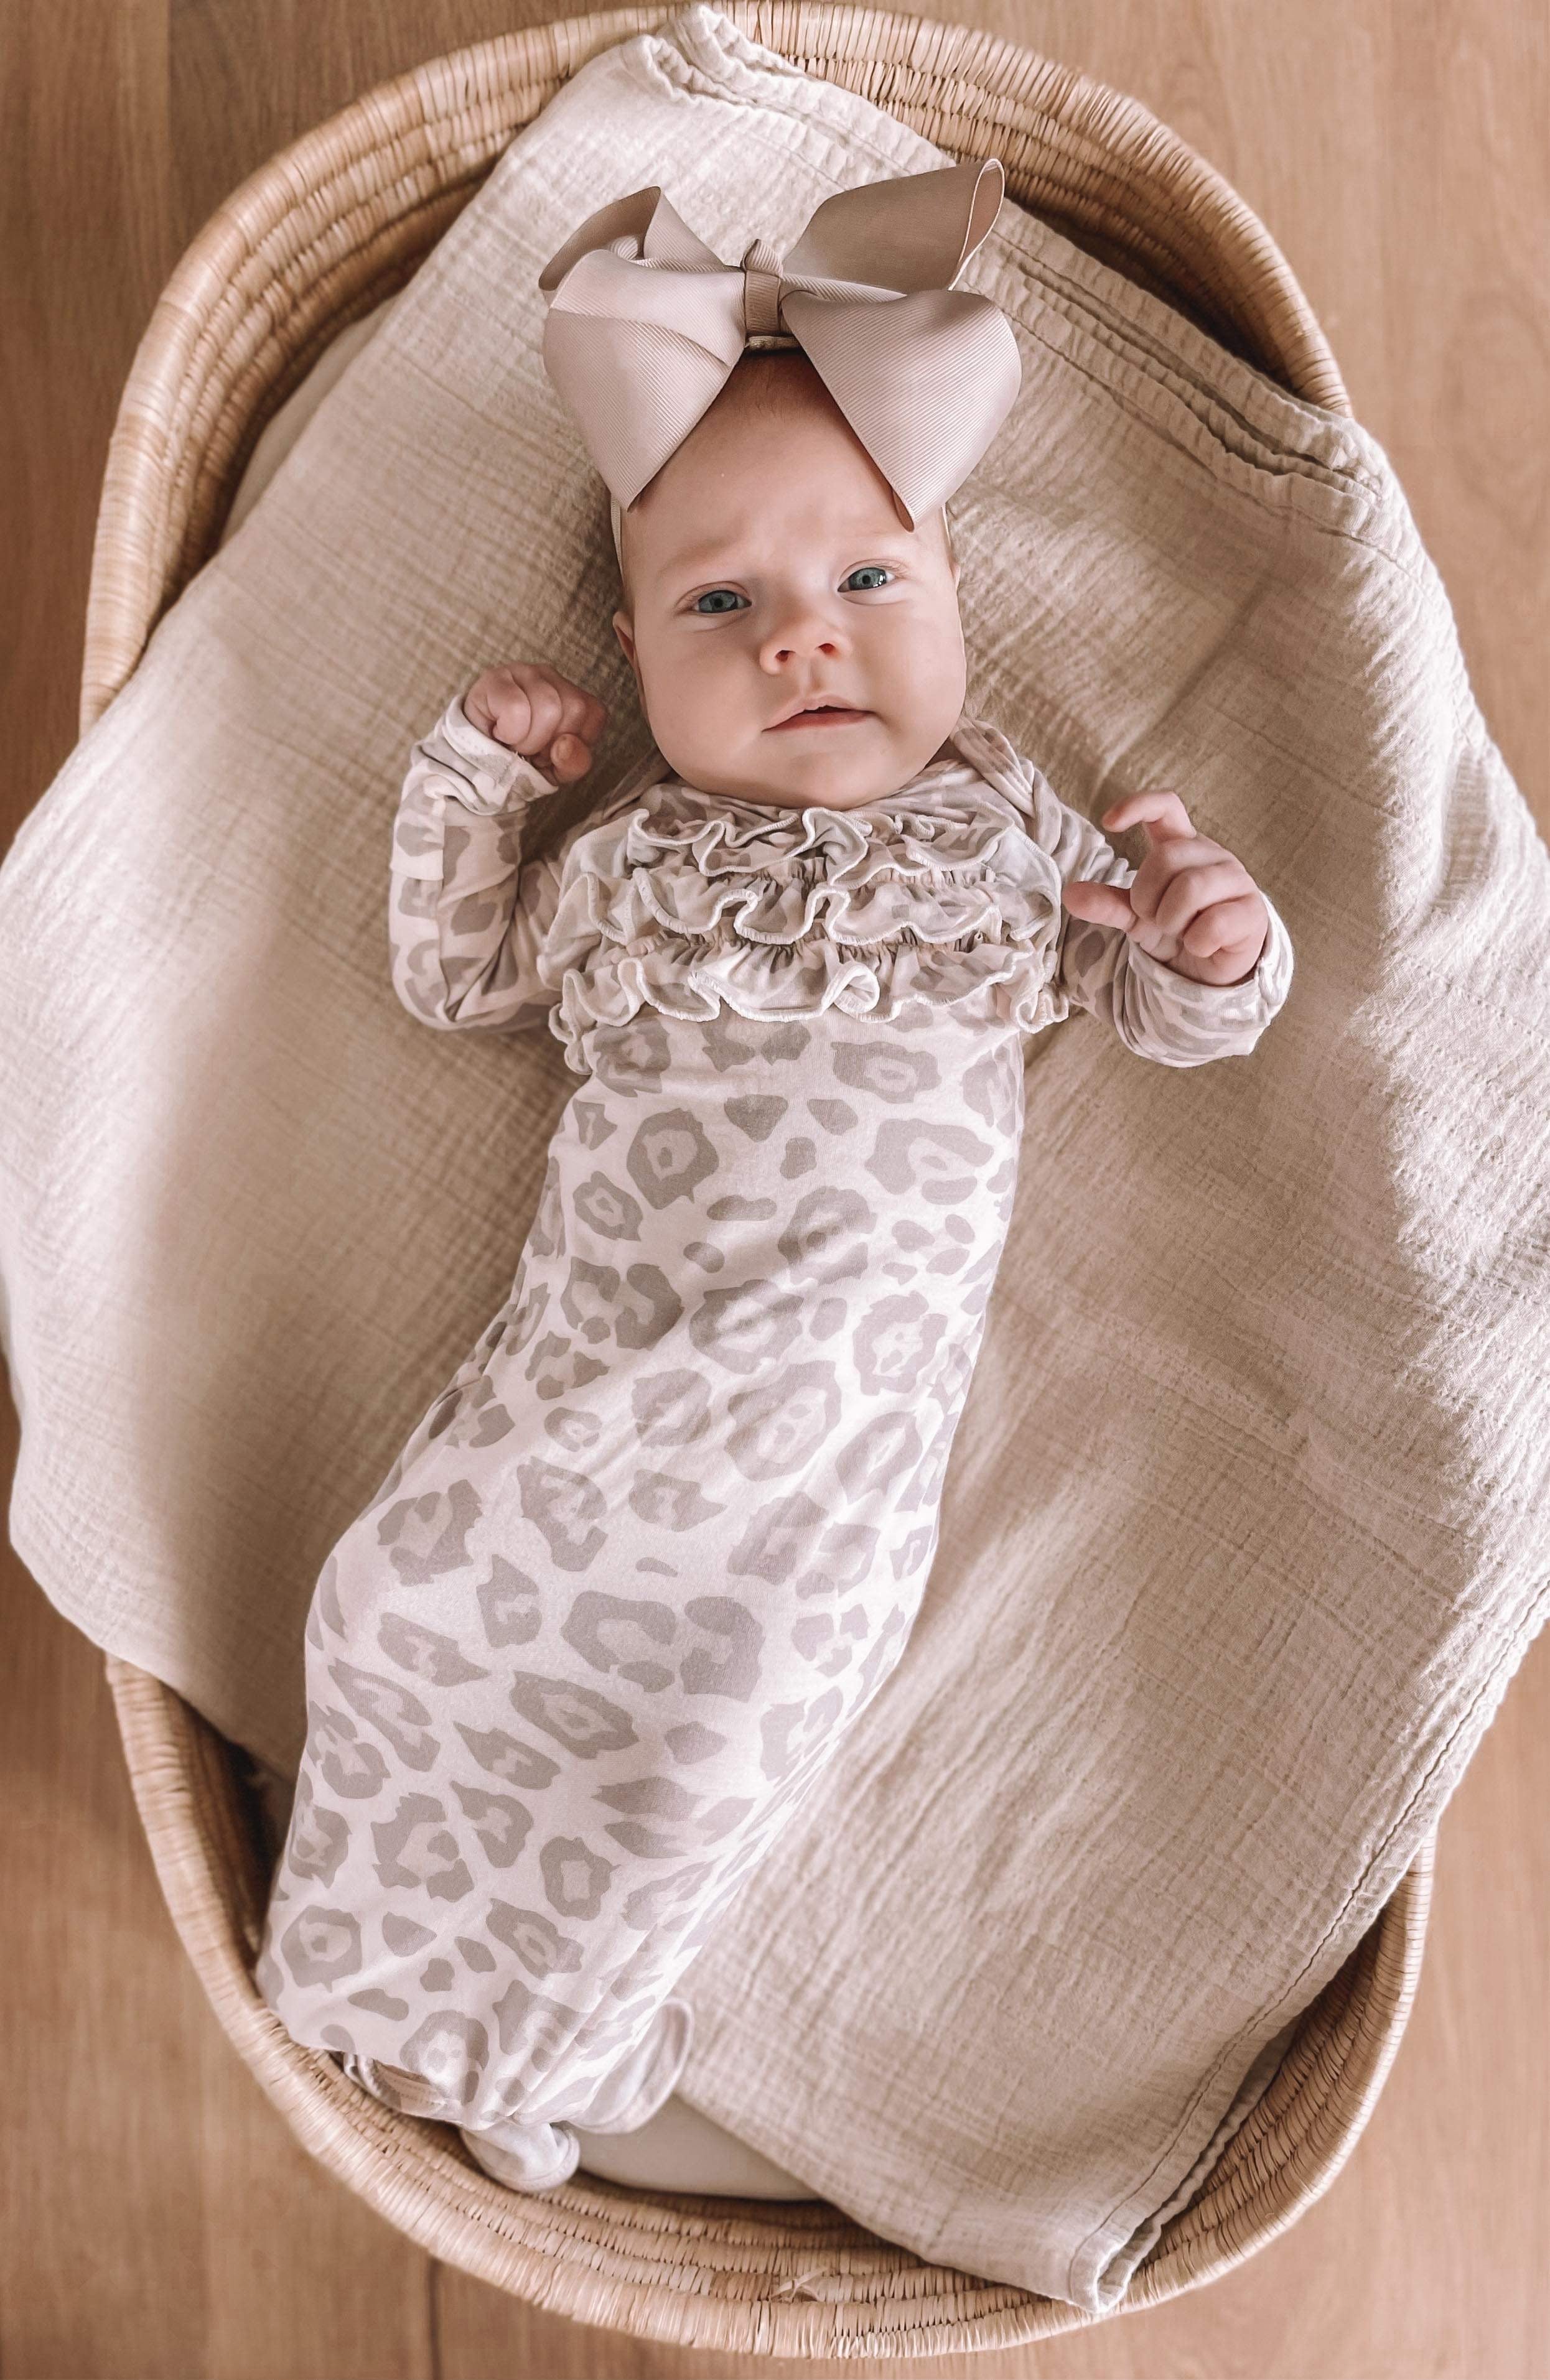 Gerber Baby Boy shirt Gowns with Mitten Cuffs 4-Pack for sale online | eBay